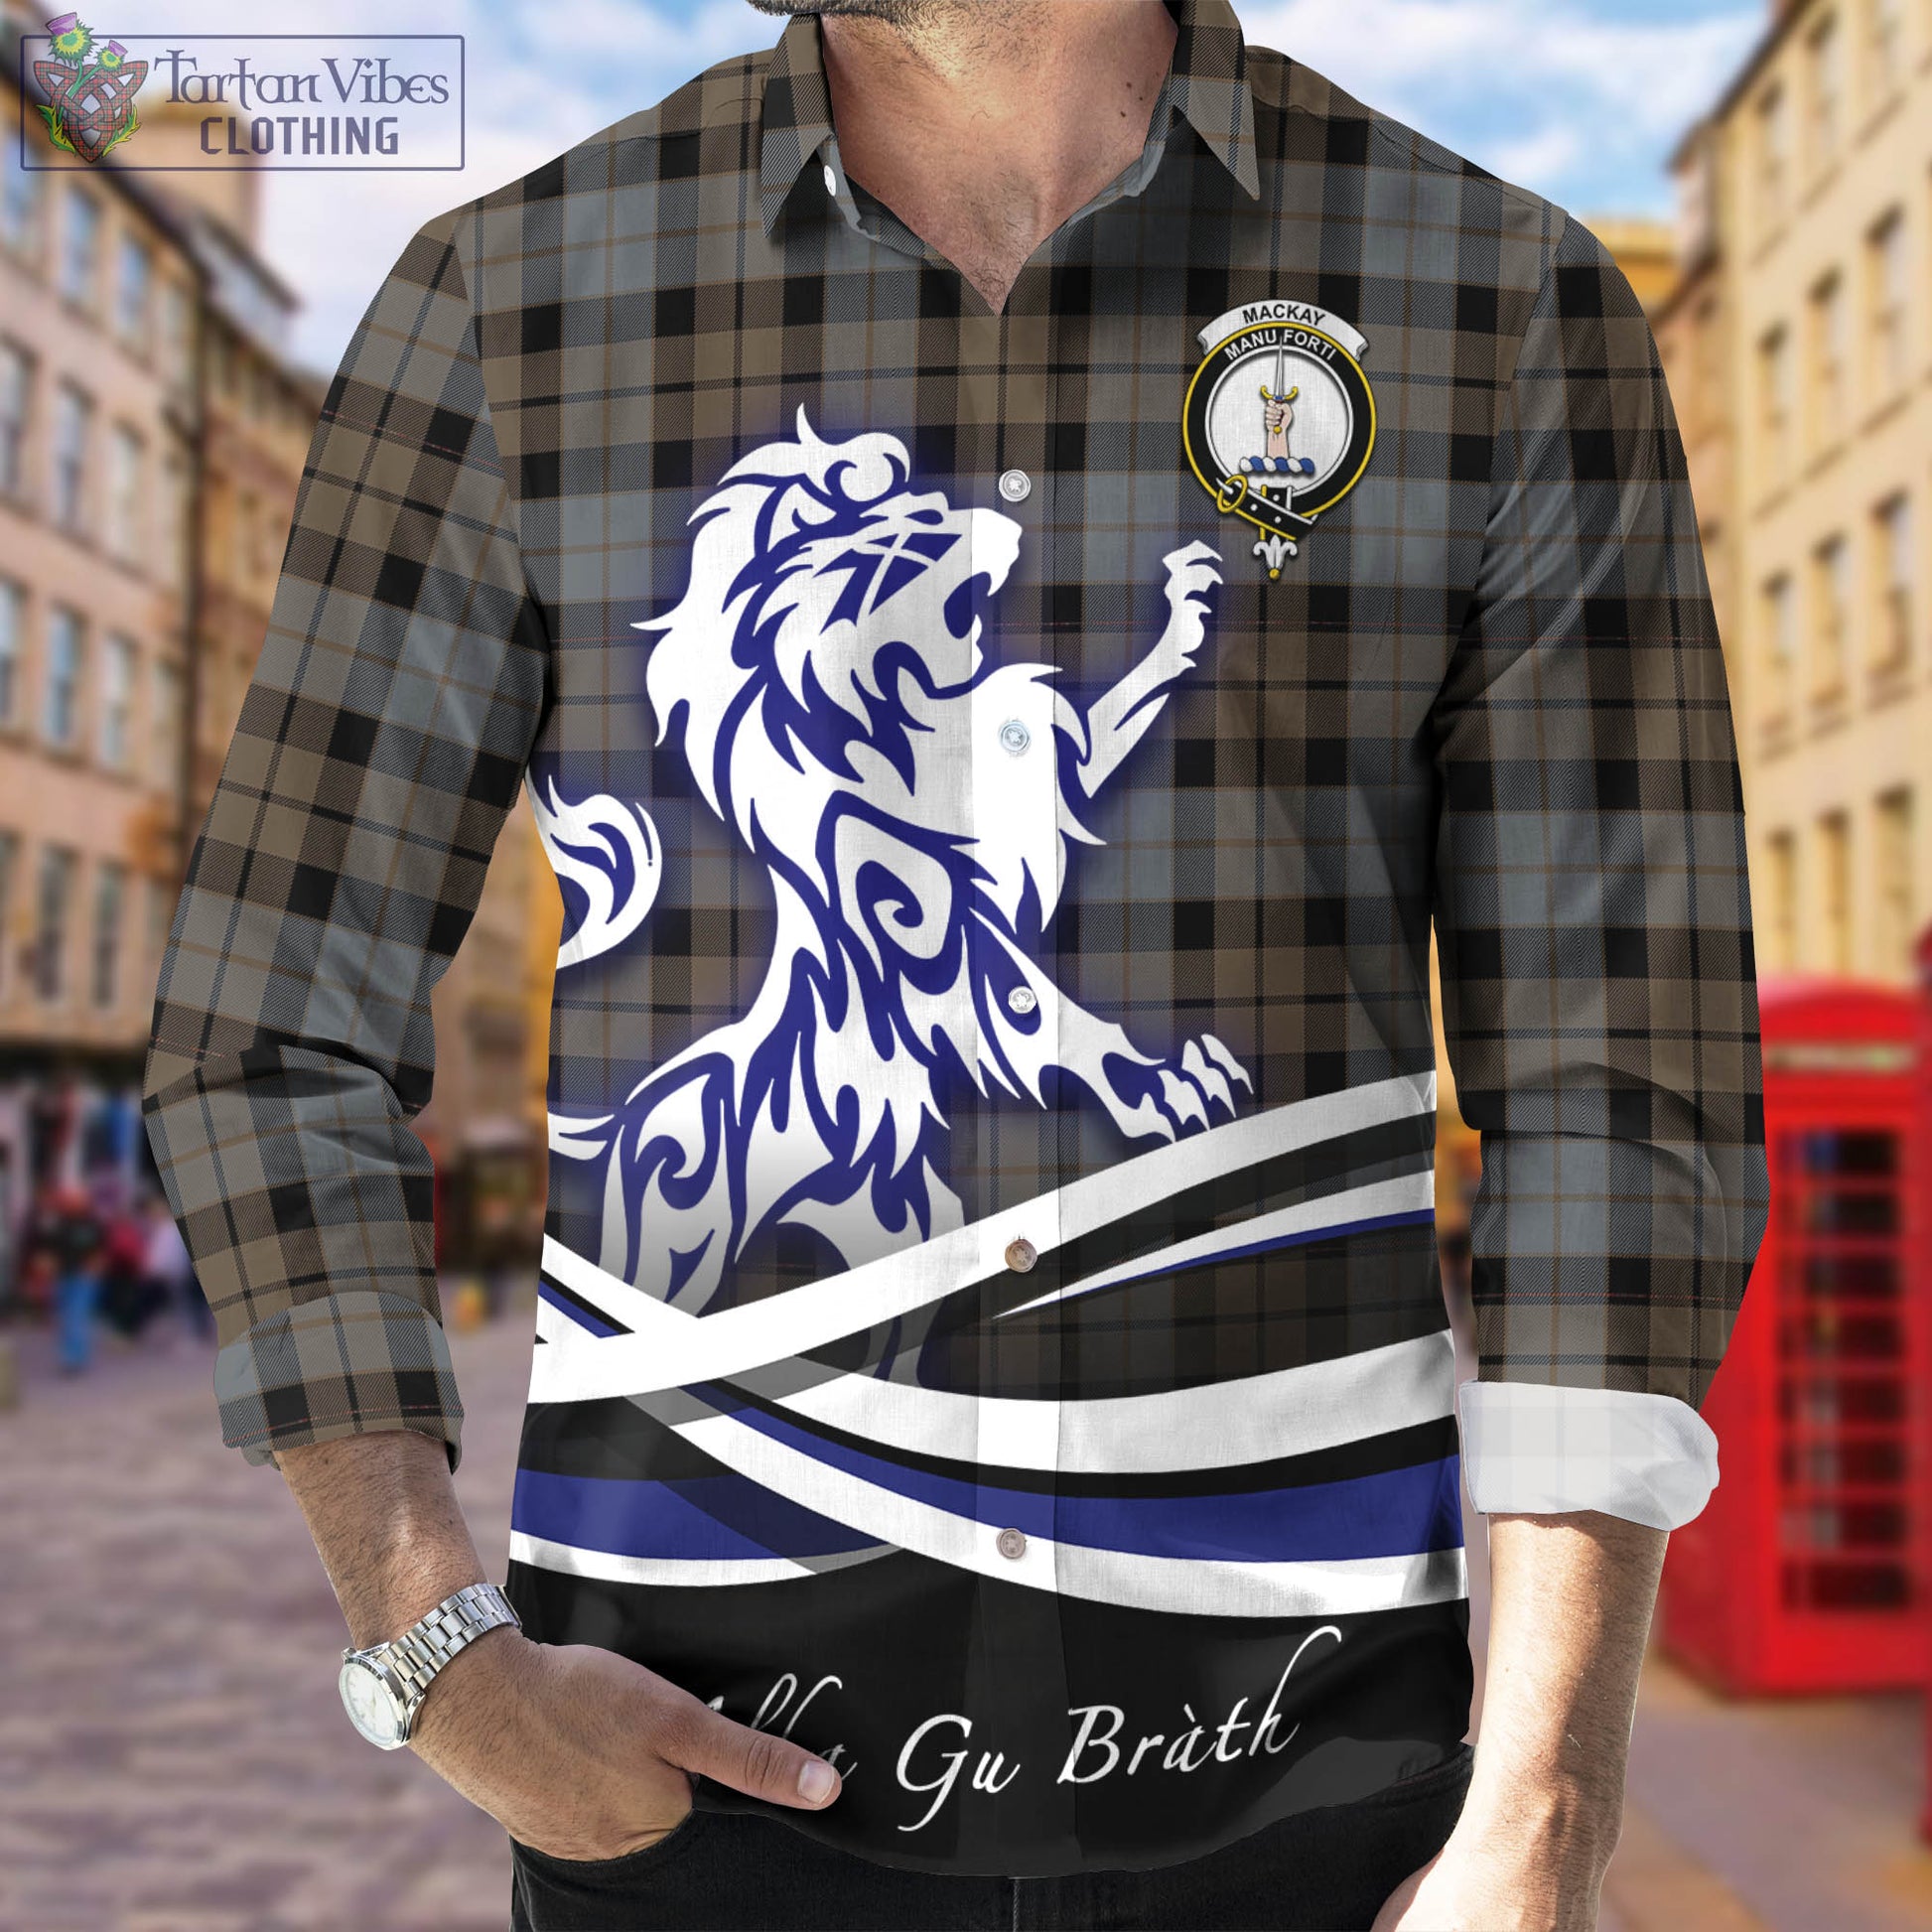 mackay-weathered-tartan-long-sleeve-button-up-shirt-with-alba-gu-brath-regal-lion-emblem